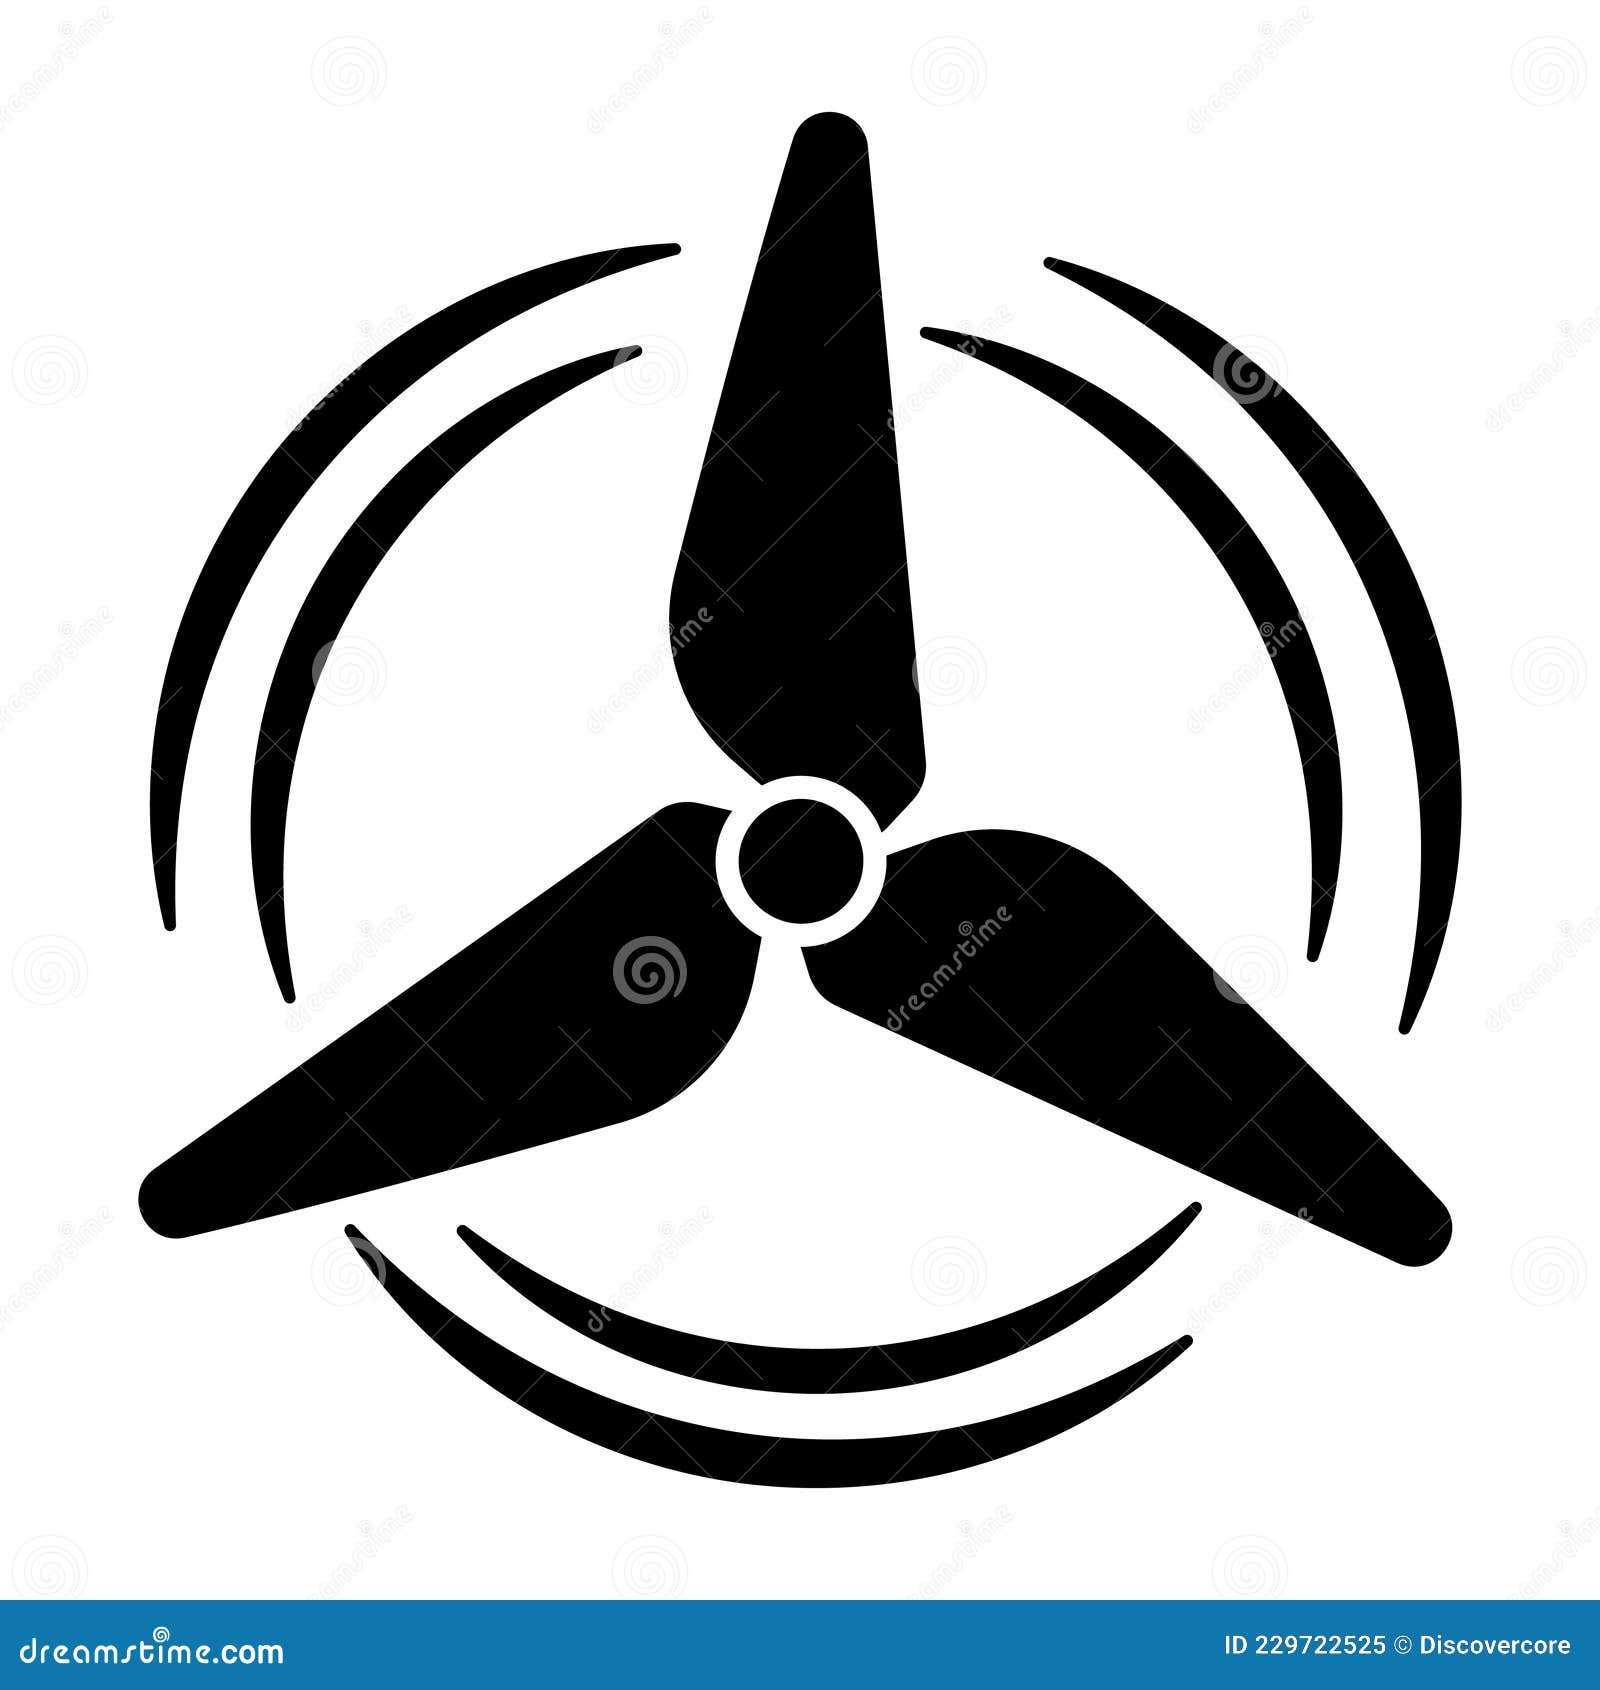 simplistic windmill wind power icon